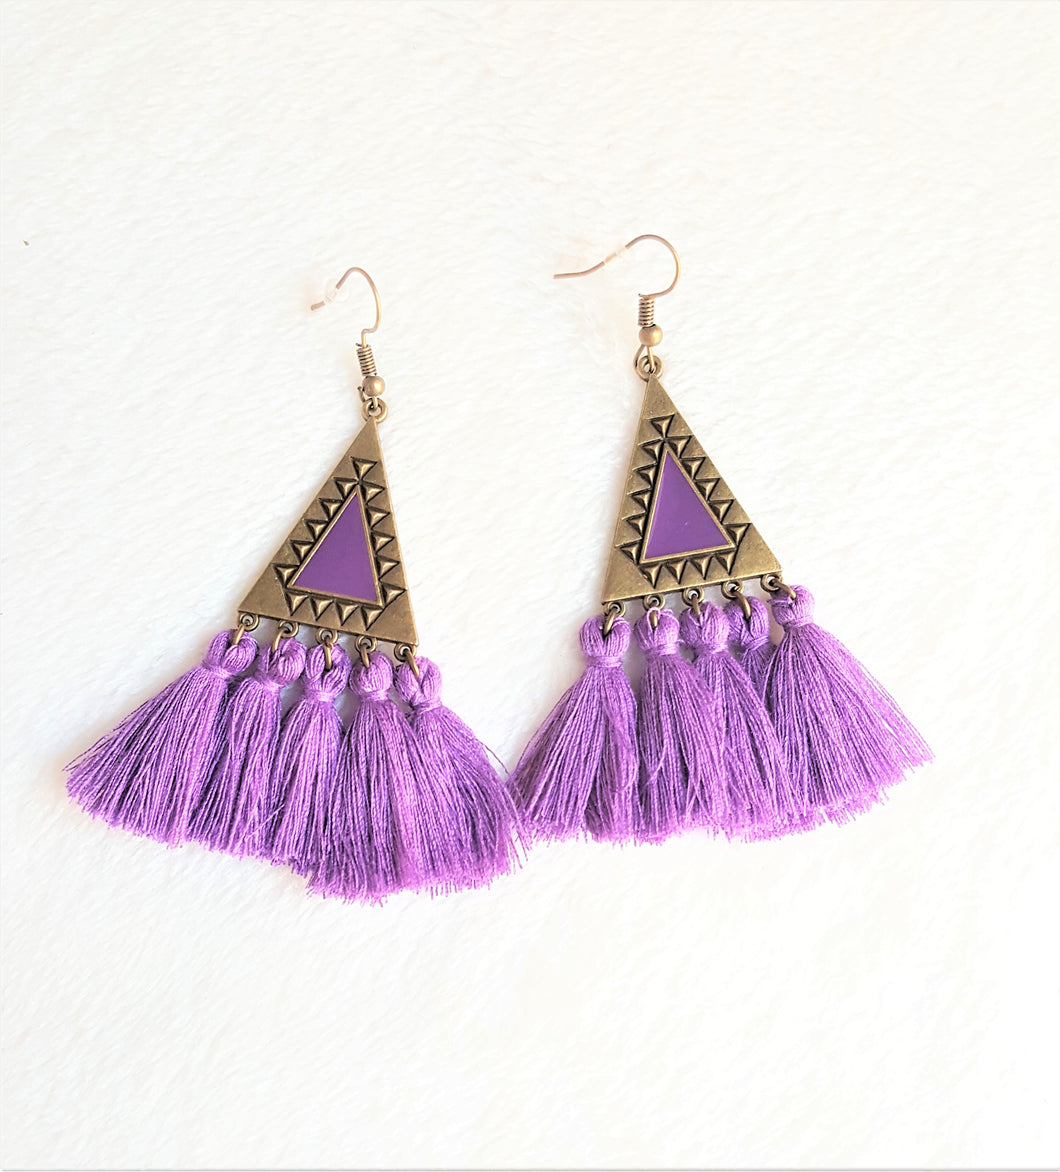 Tassel Earrings Vintage Purple Ethnic Design Triangle Charm Statement Bohemian Fashion Earrings by UrbanFlair - Urban Flair USA